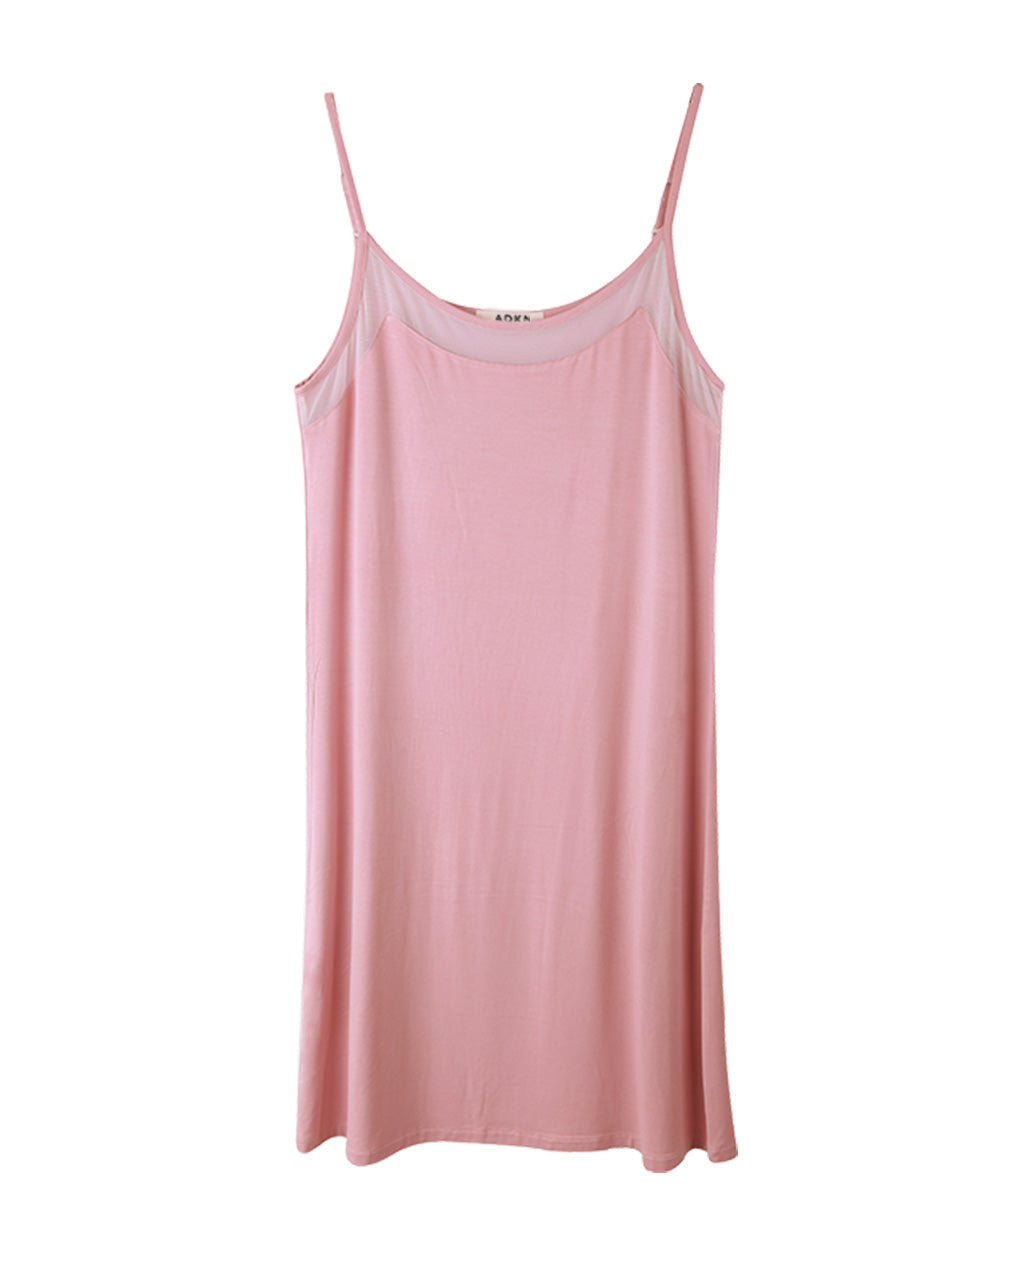 ADKN Bamboo Nightdress - Pink Slip Dress